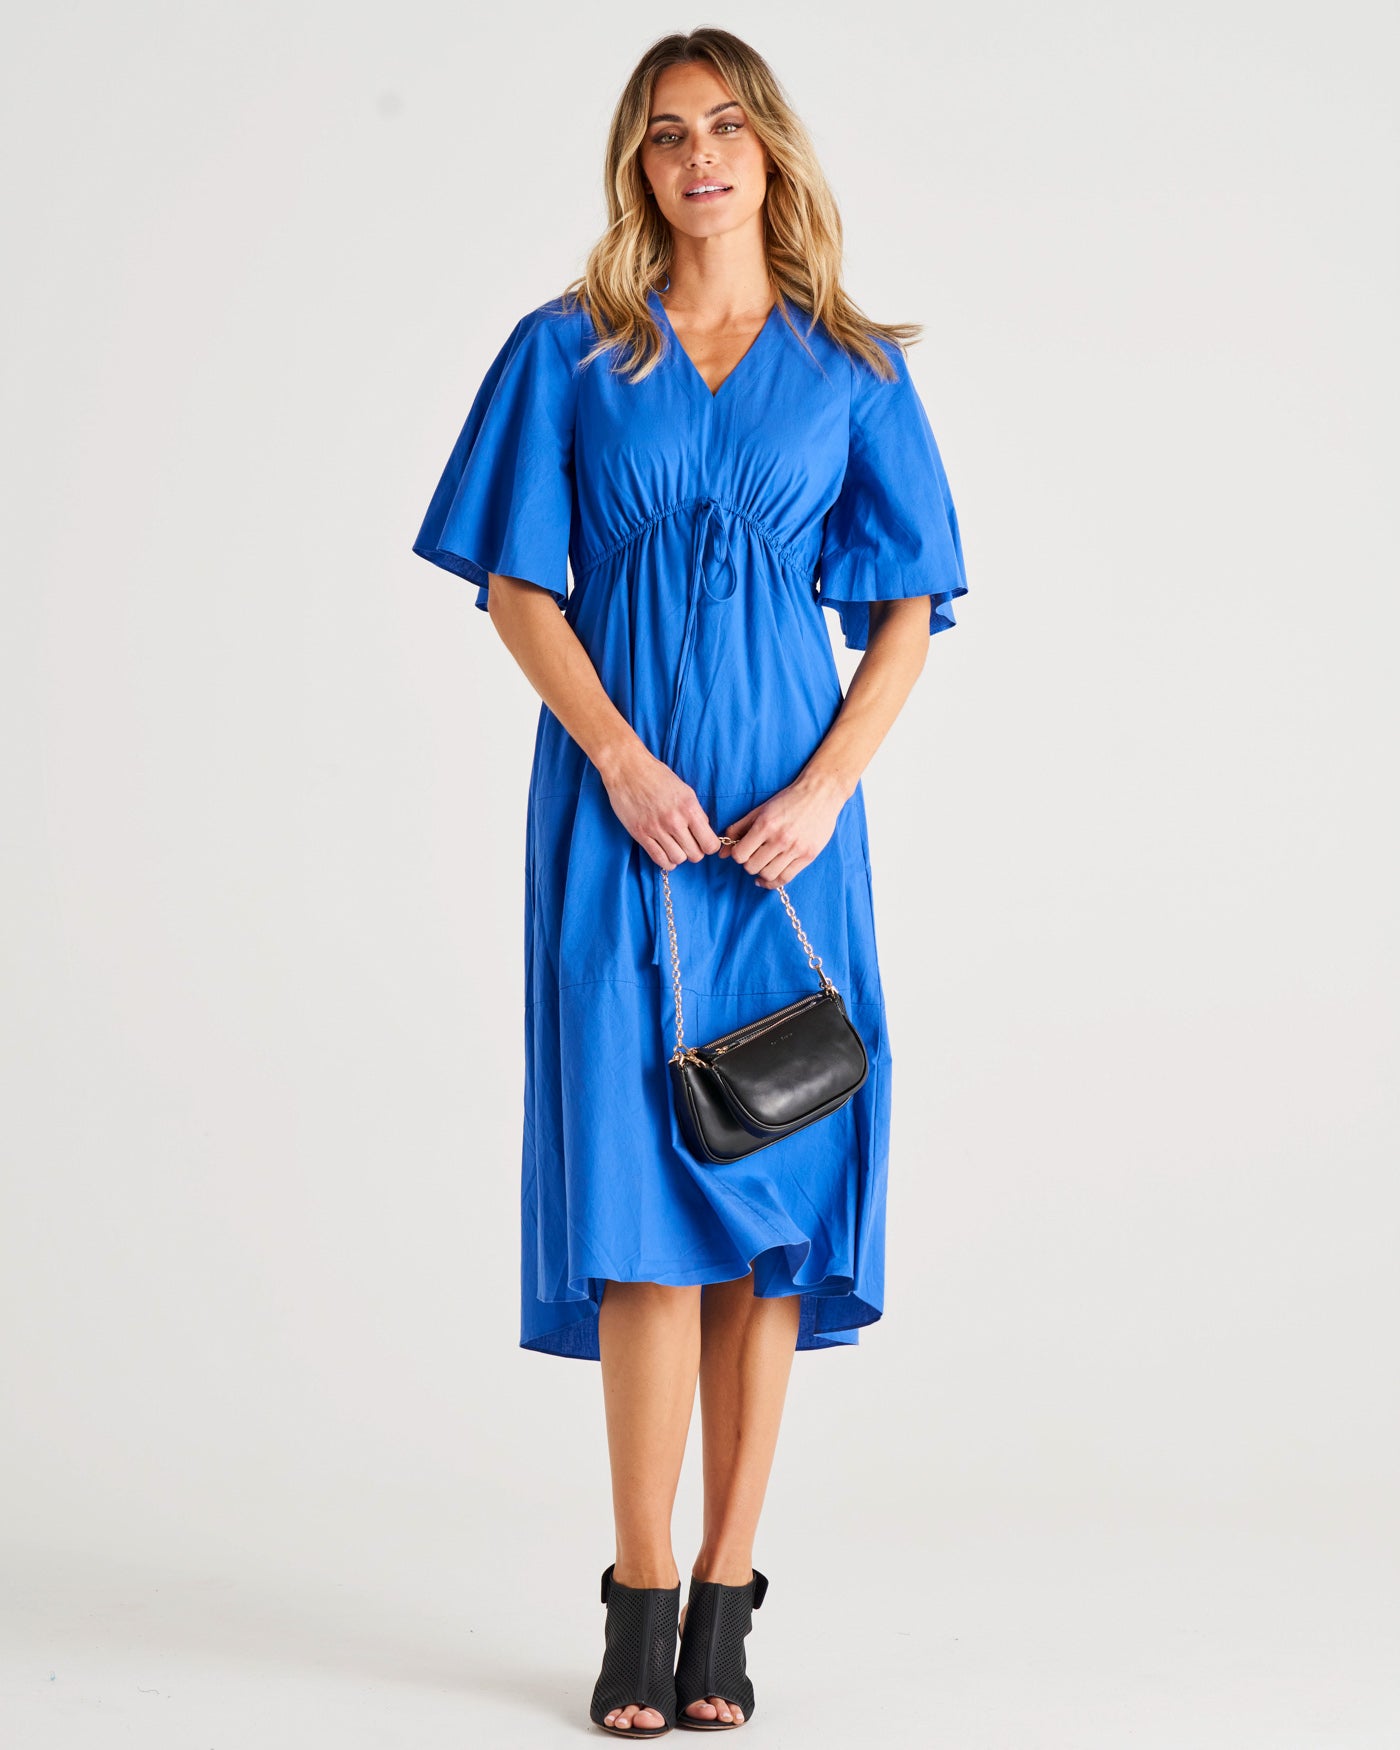 Cora Empire Waist Cotton Midi Dress - Iris Blue